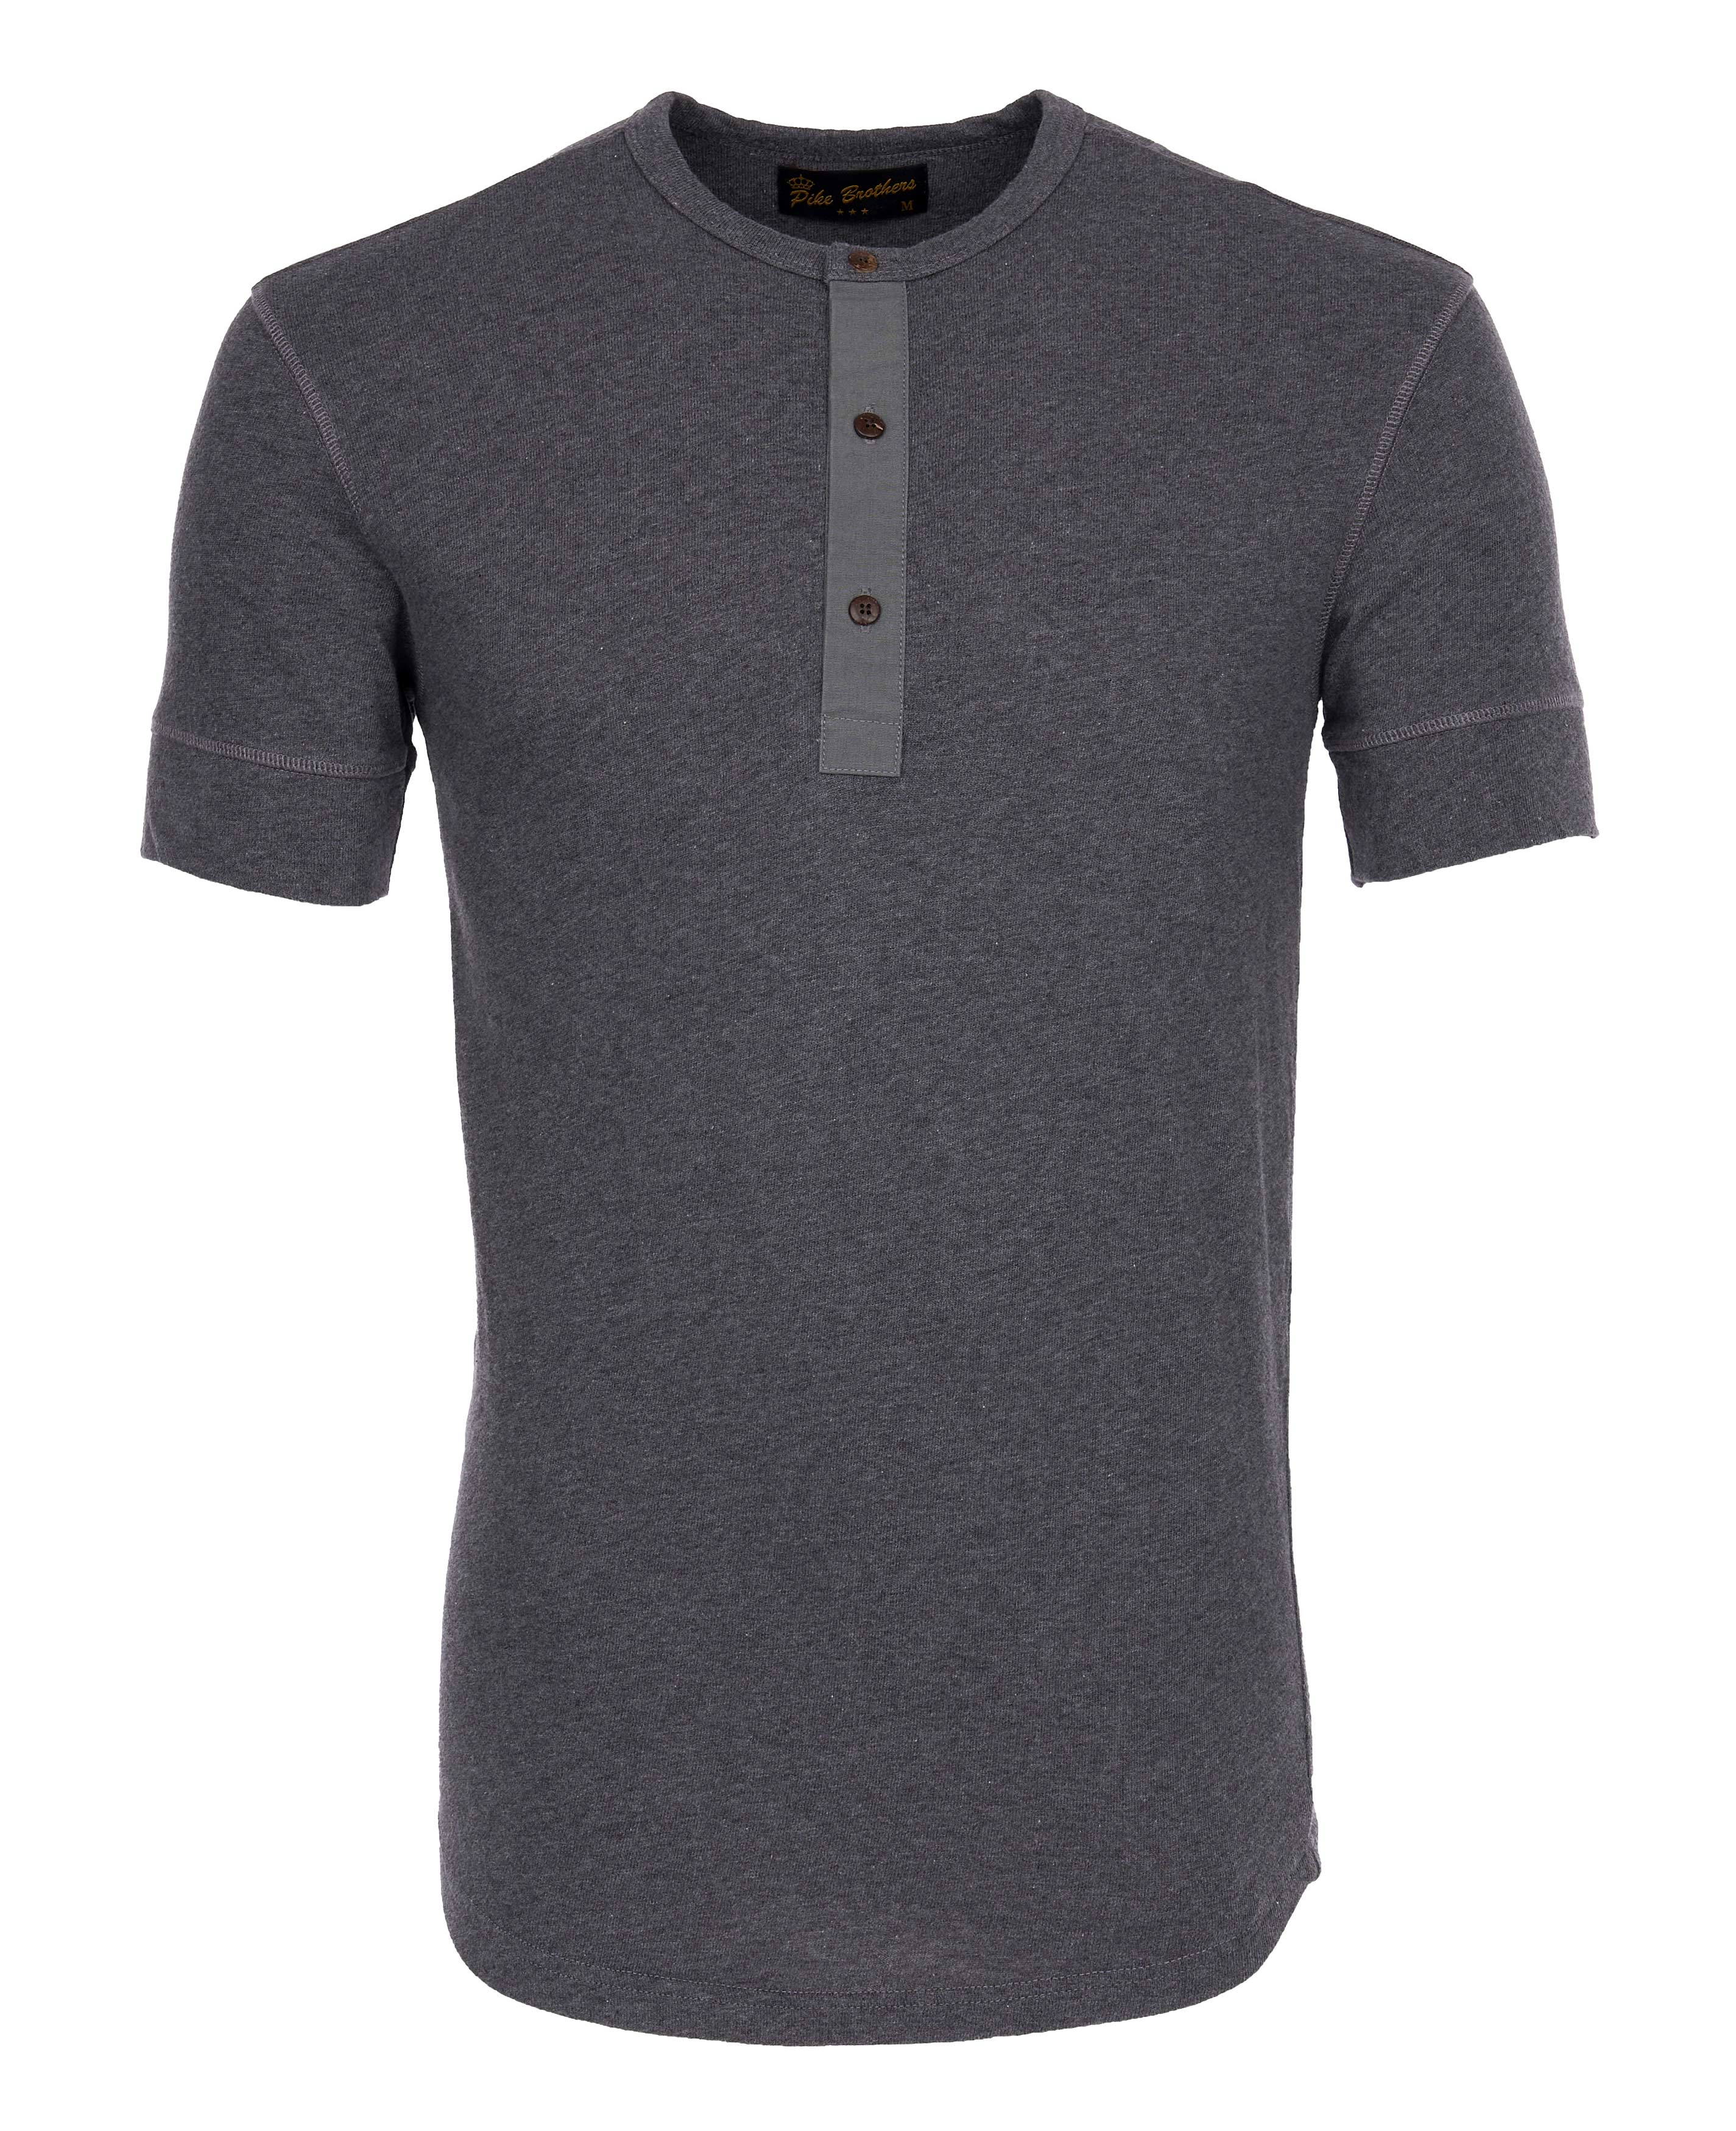 1927 Henley Shirt short sleeve grey melange